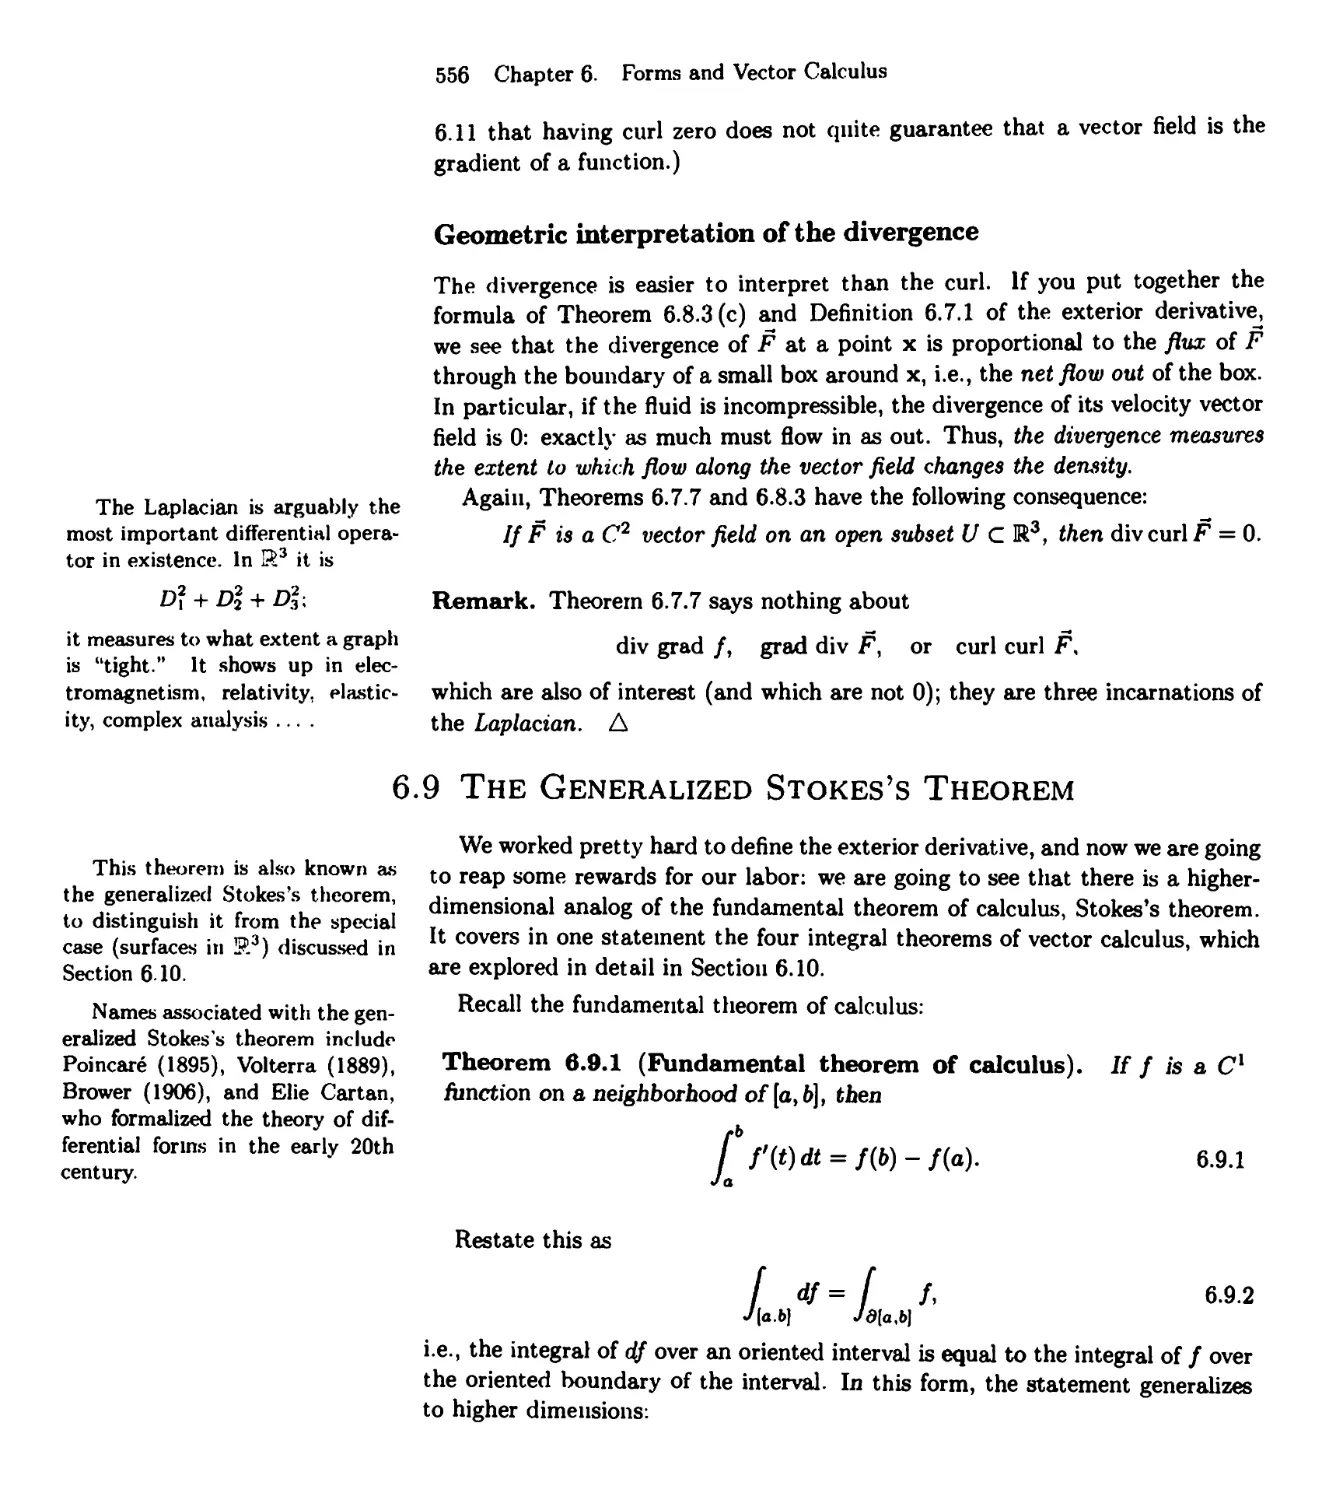 6.9 Generalized Stokes's Theorem